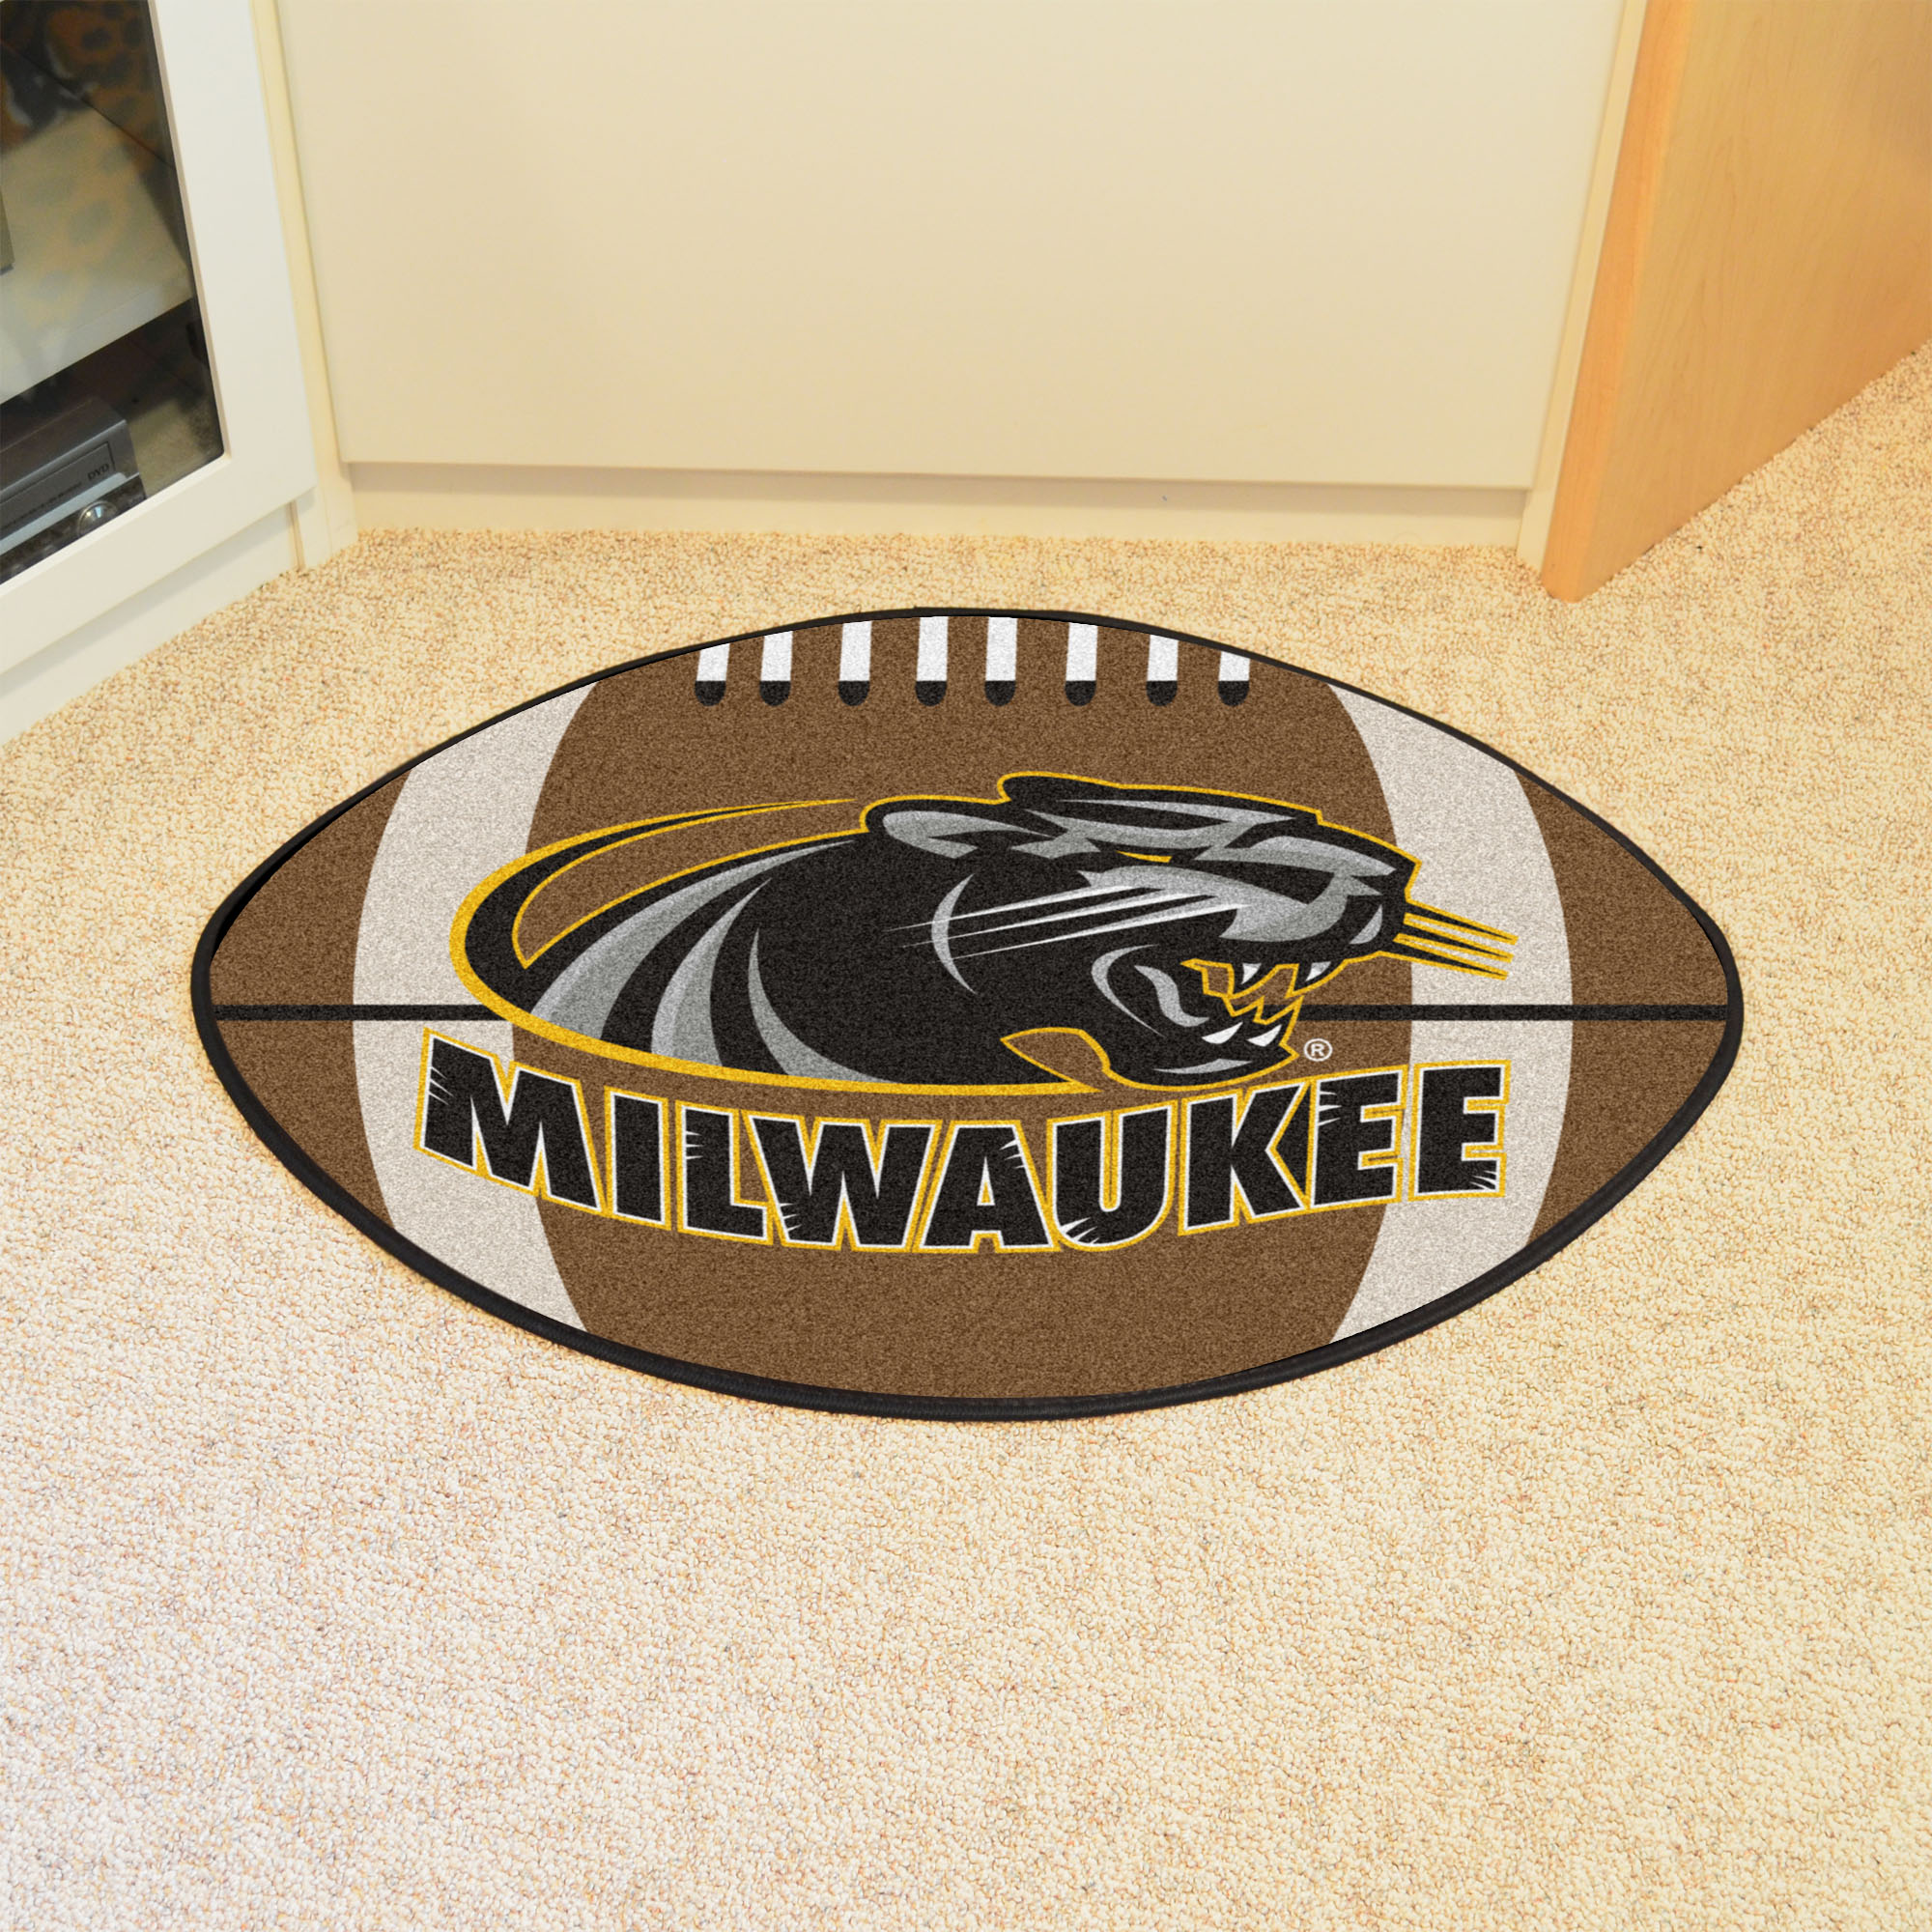 University of Wisconsin-Milwaukee Ball Shaped Area rugs (Ball Shaped Area Rugs: Football)